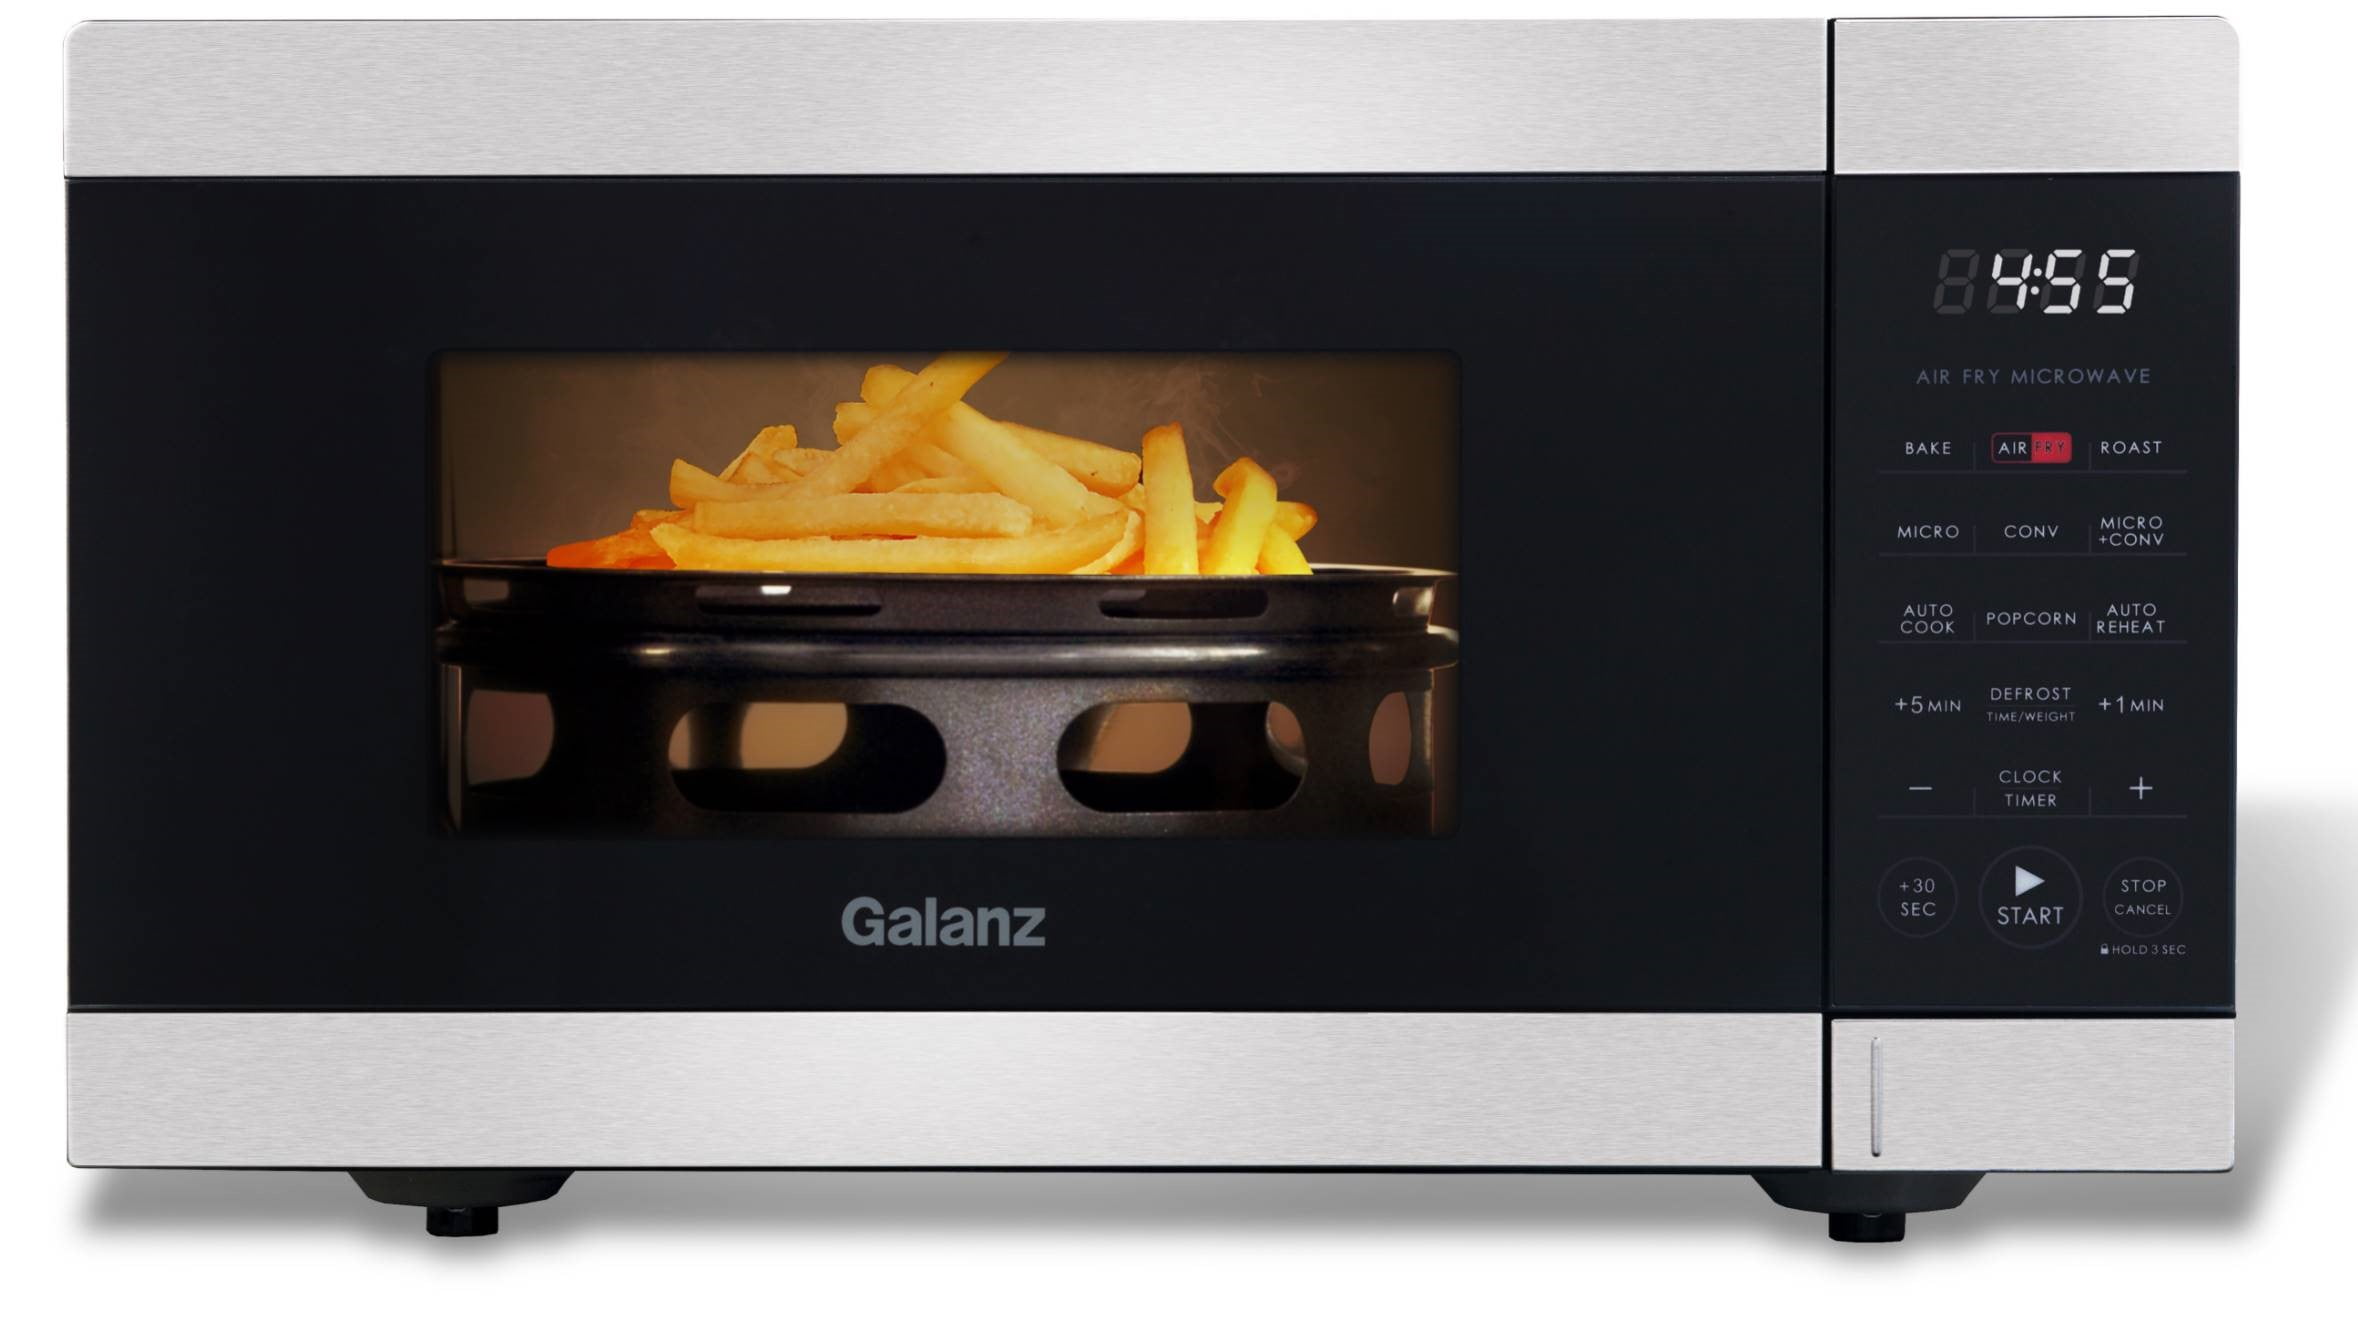 Galanz 0.9 Cu Ft Air Fry Microwave, 900 Watts - Walmart.com - Walmart.com